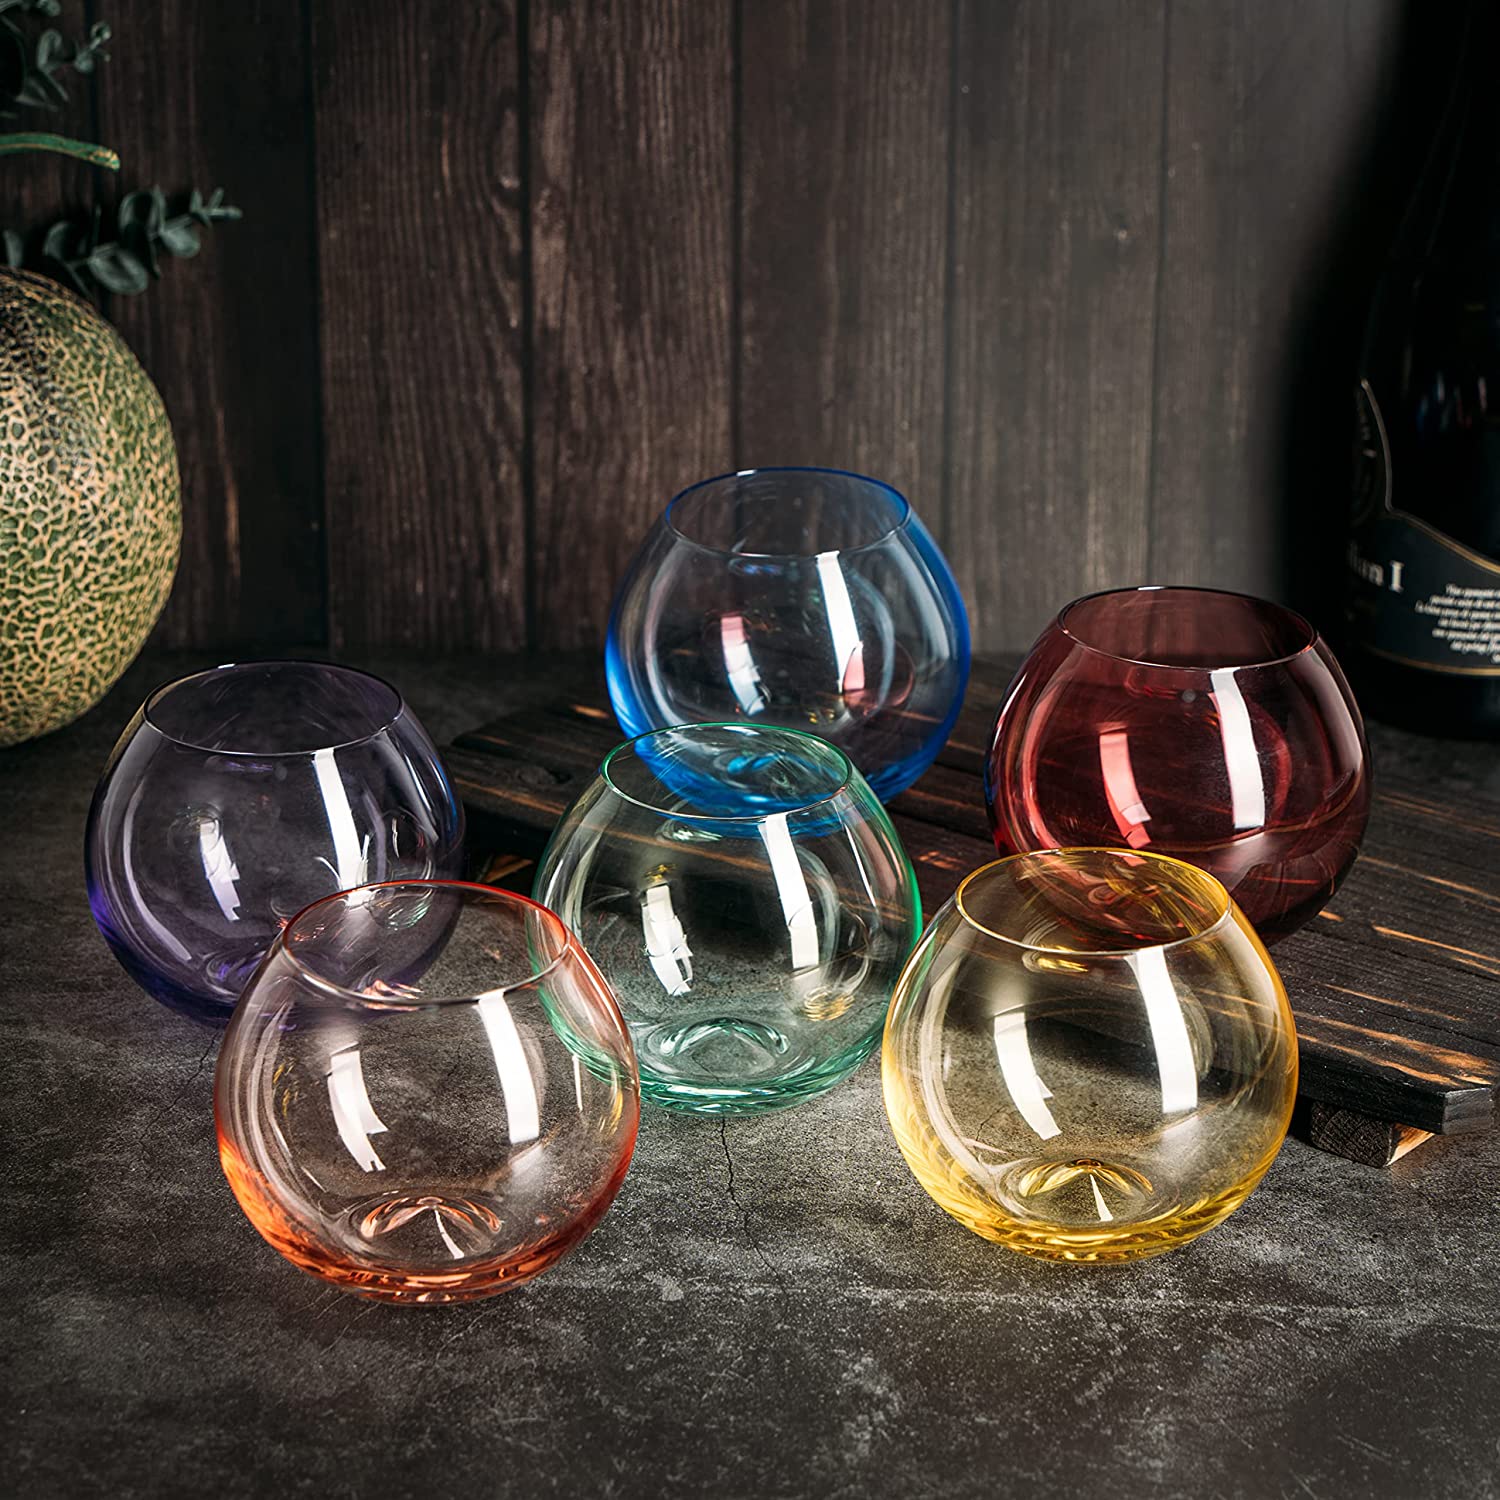 Iridescent Wine Glass set of 2/4/6, 19 oz Pretty Cute Cool Rainbow Colorful  Halloween Glassware - Set of 4